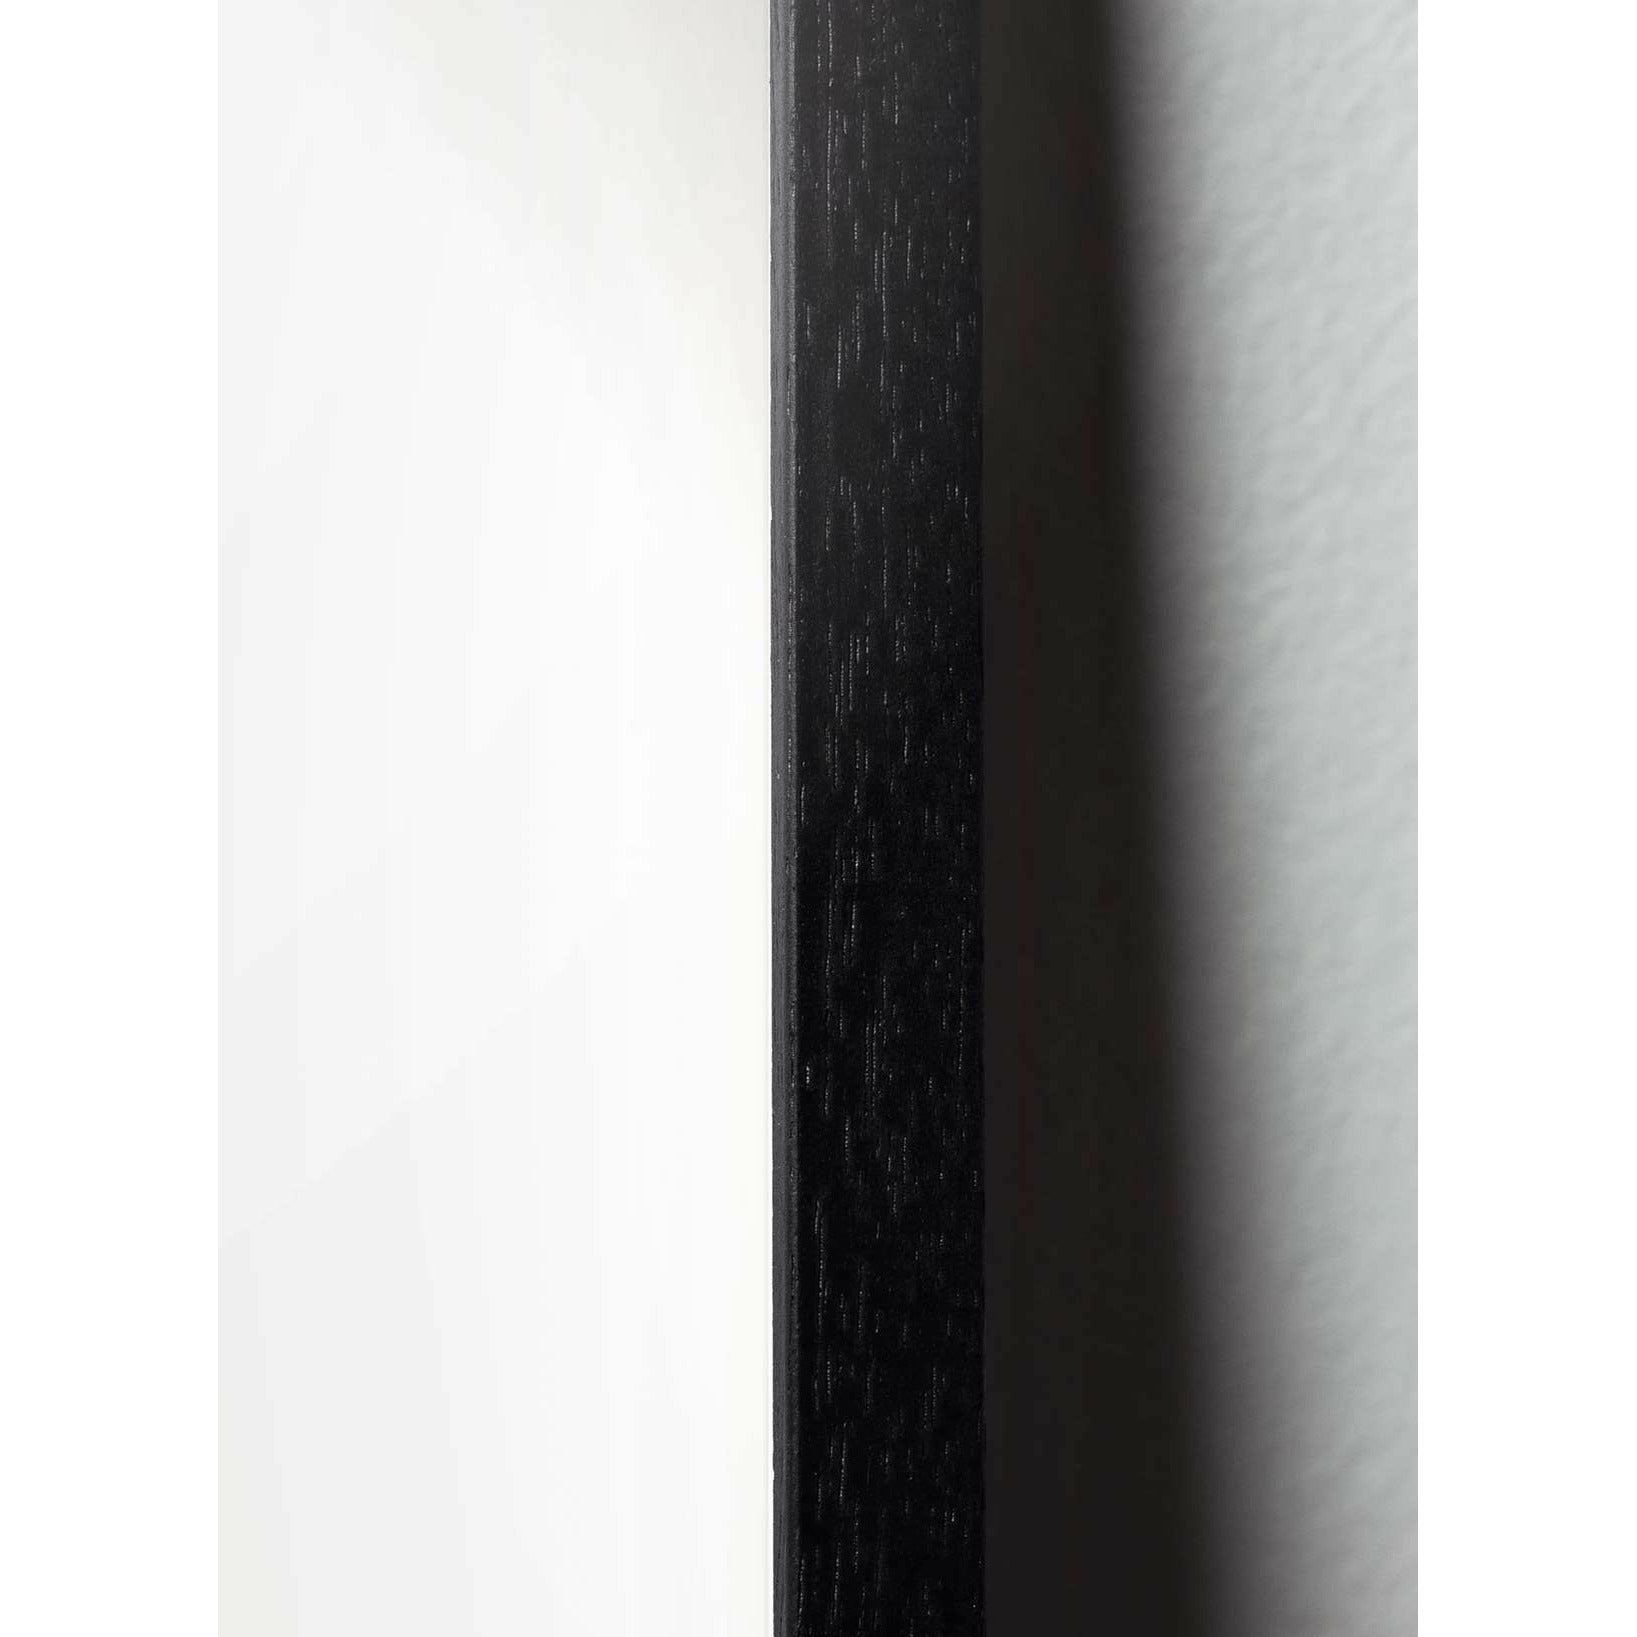 Brainchild Egg Line Poster, Frame In Black Lacquered Wood 70x100 Cm, White Background